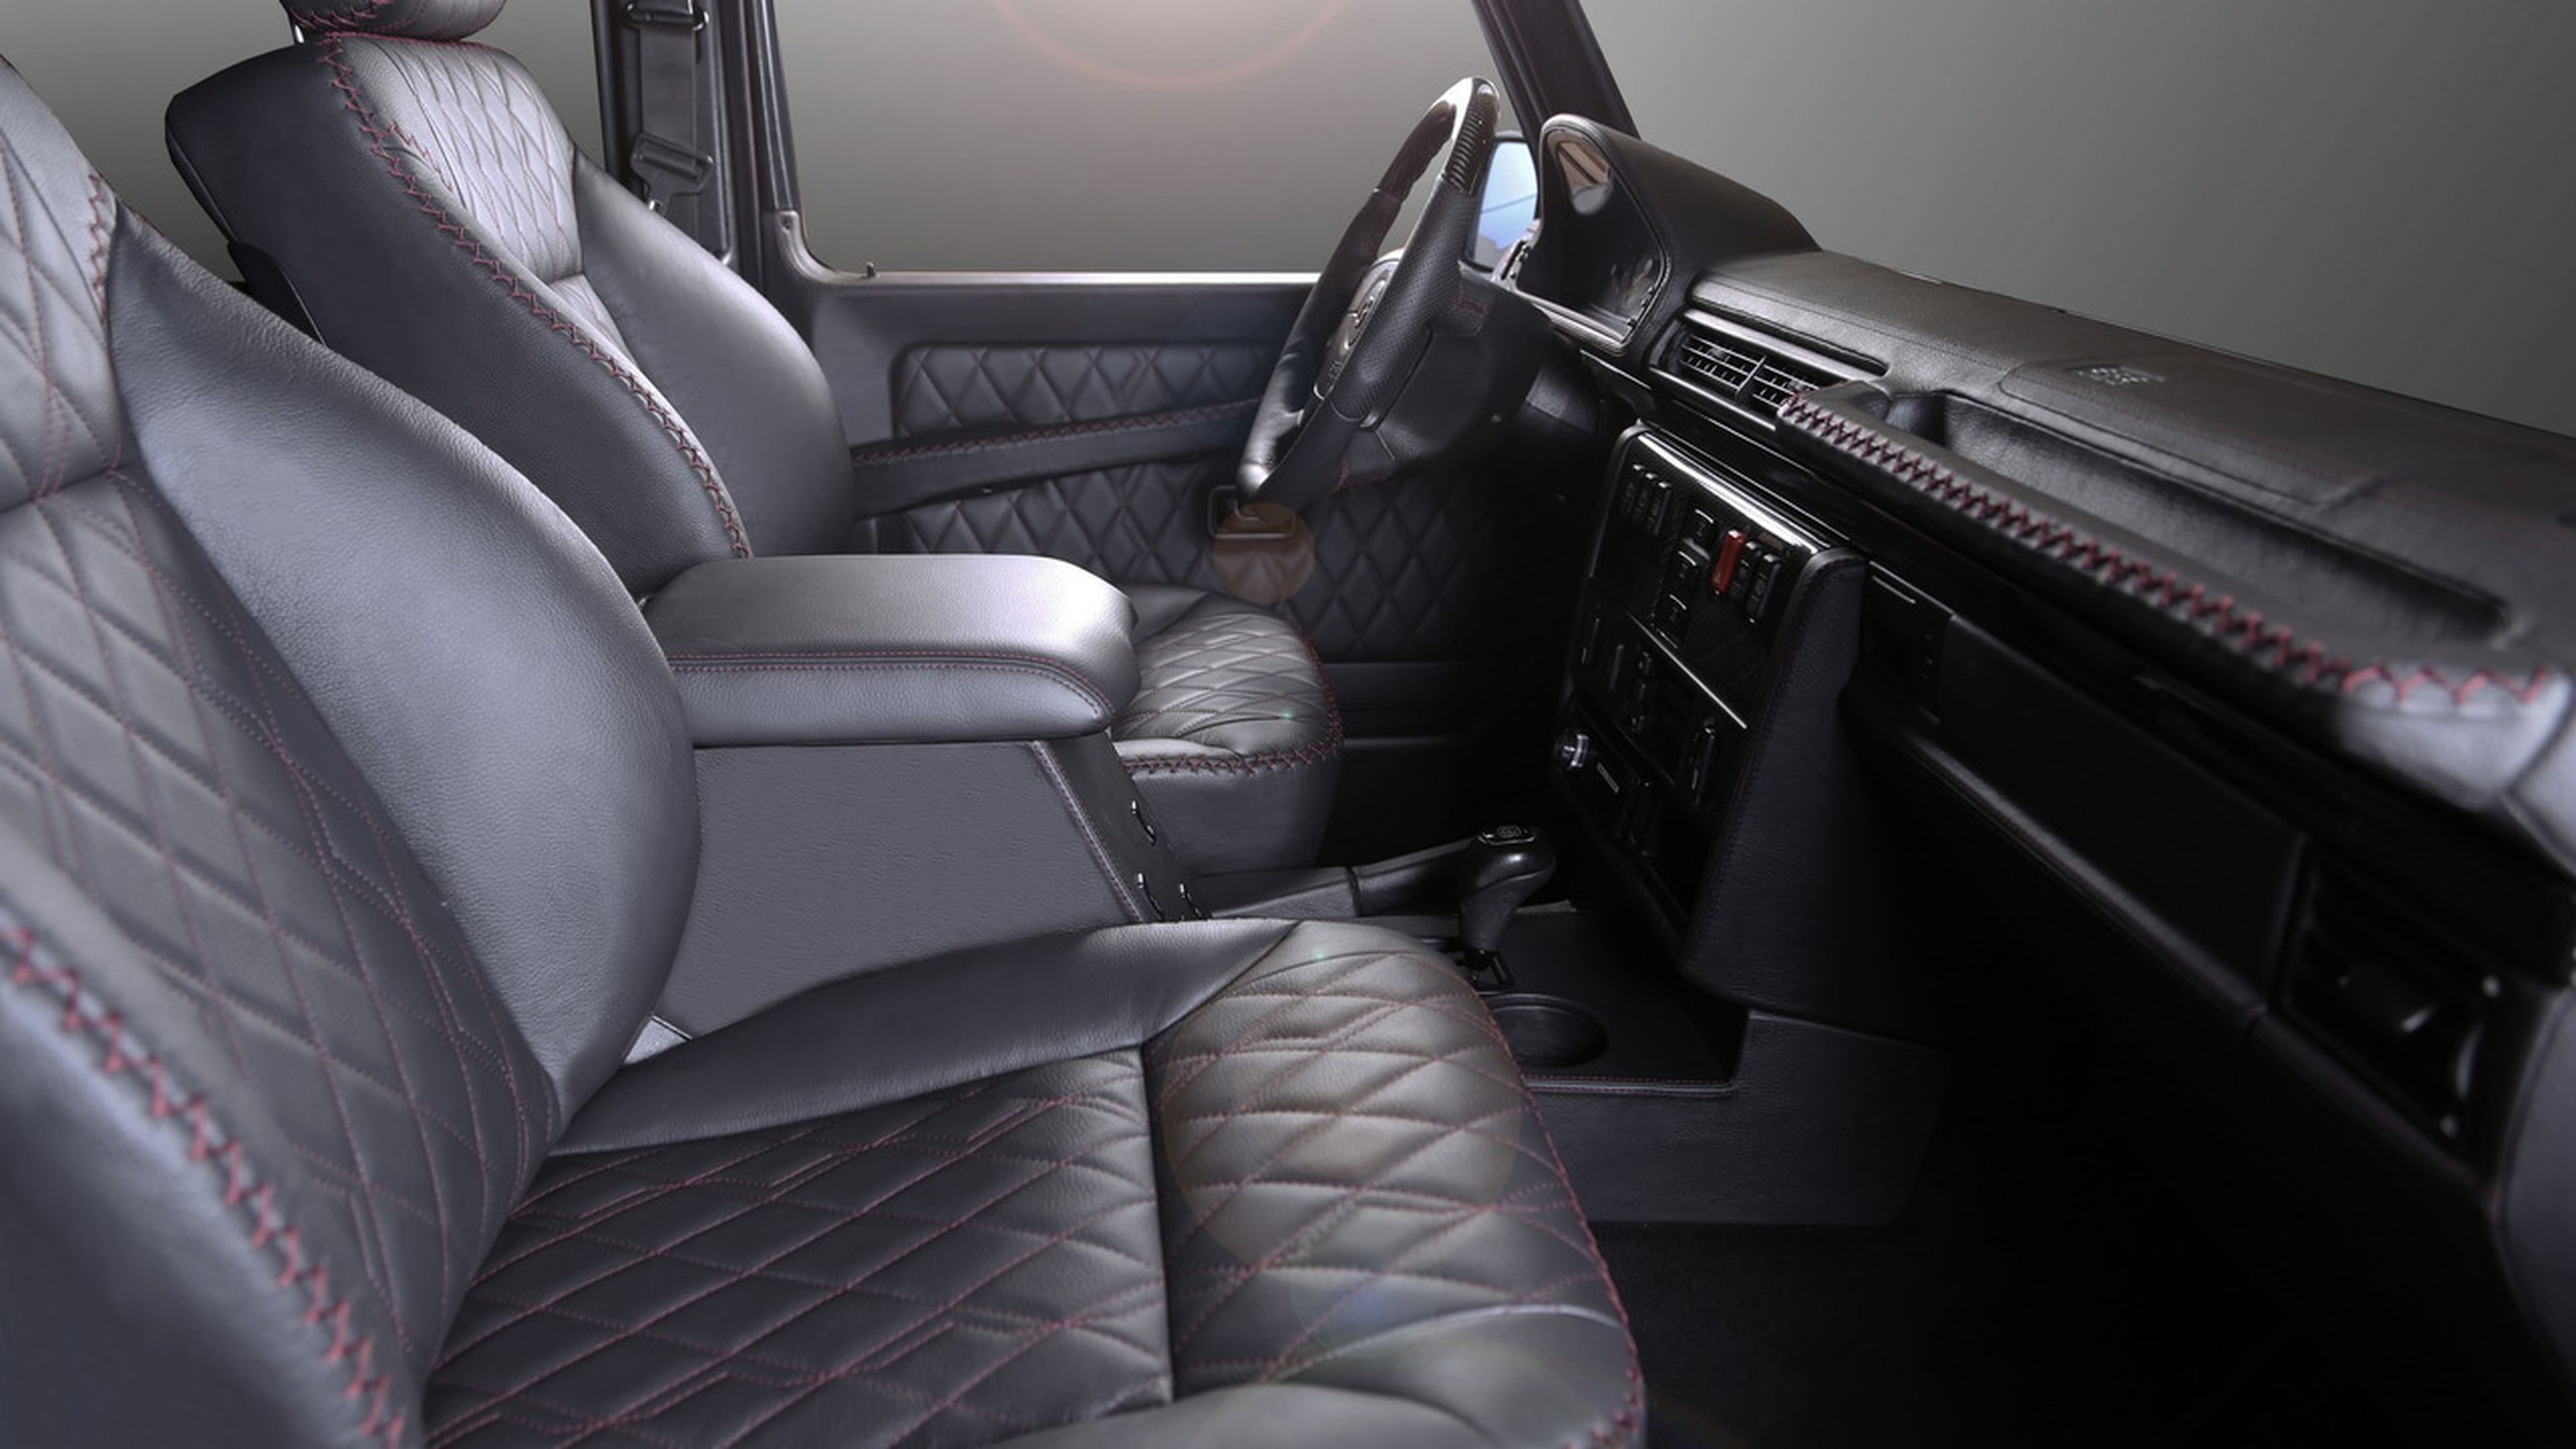 Mercedes Clase G Carbon Motors interior